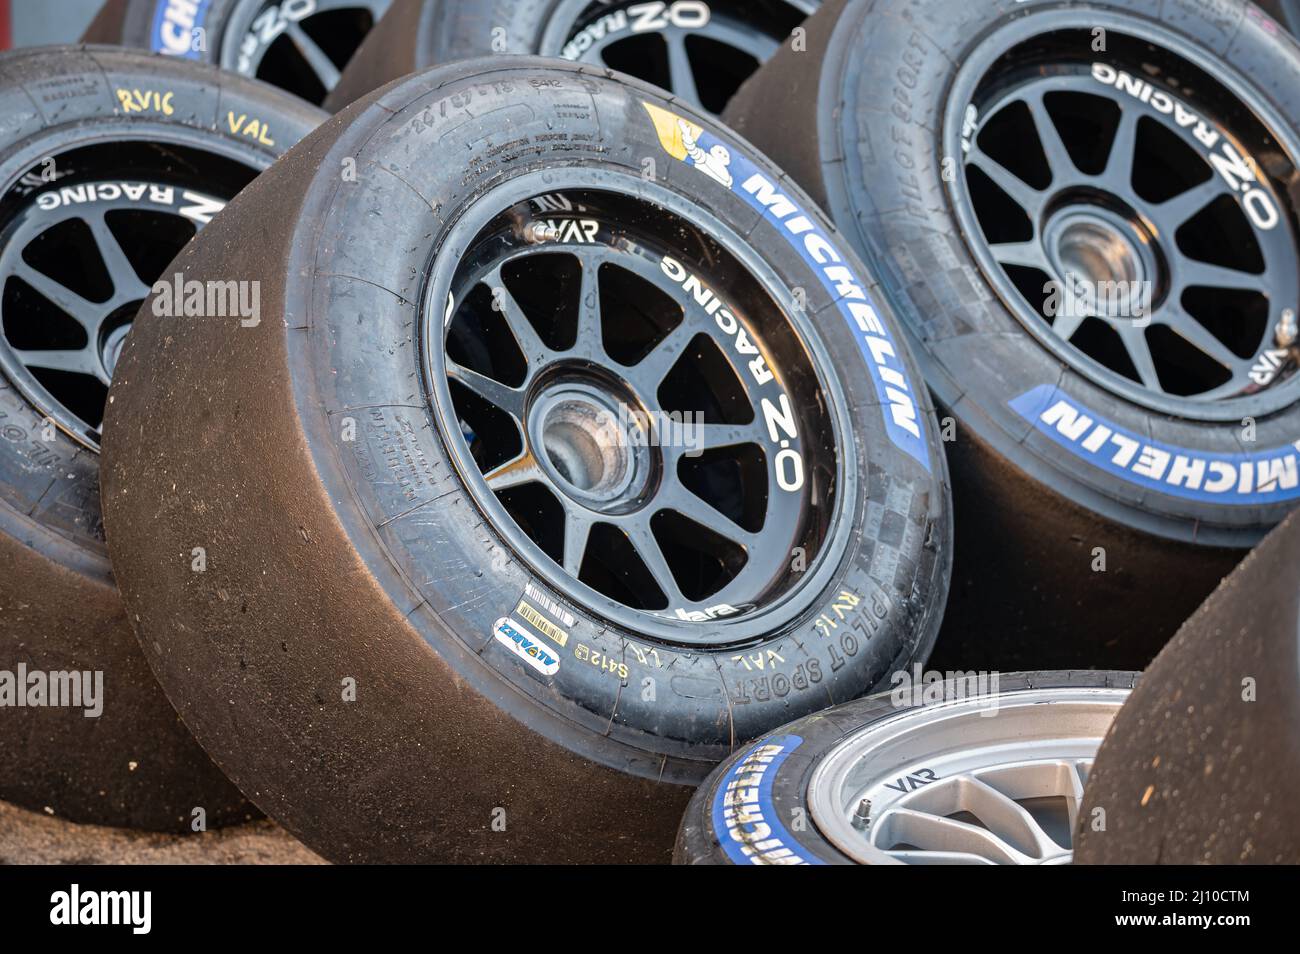 Closeup of the racing wheels on the racing circuit Stock Photo